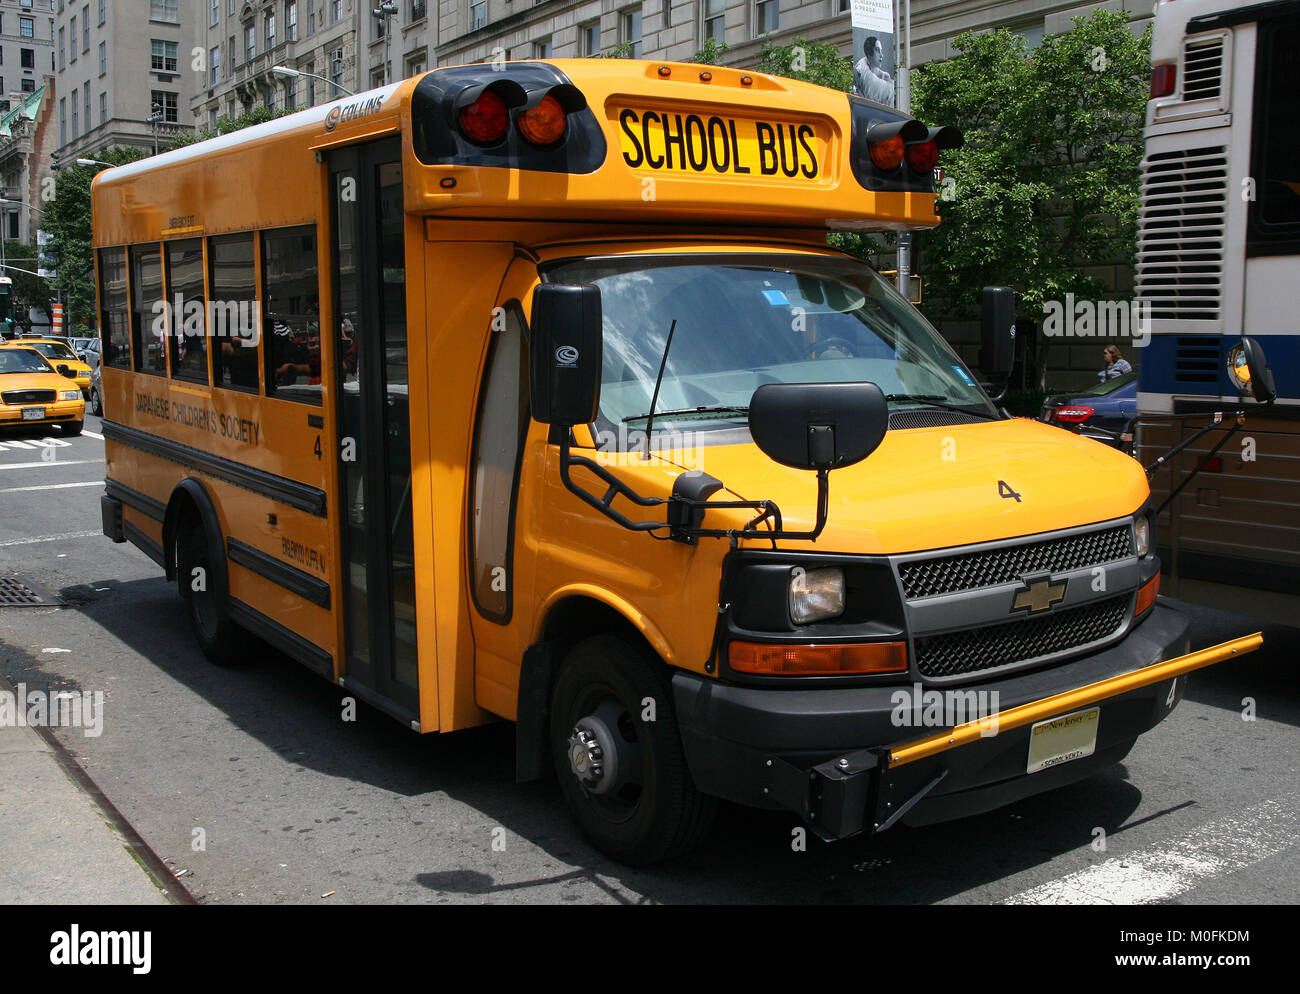 School bus on street, Upper Manhattan, New York City, New York State, USA. Stock Photo